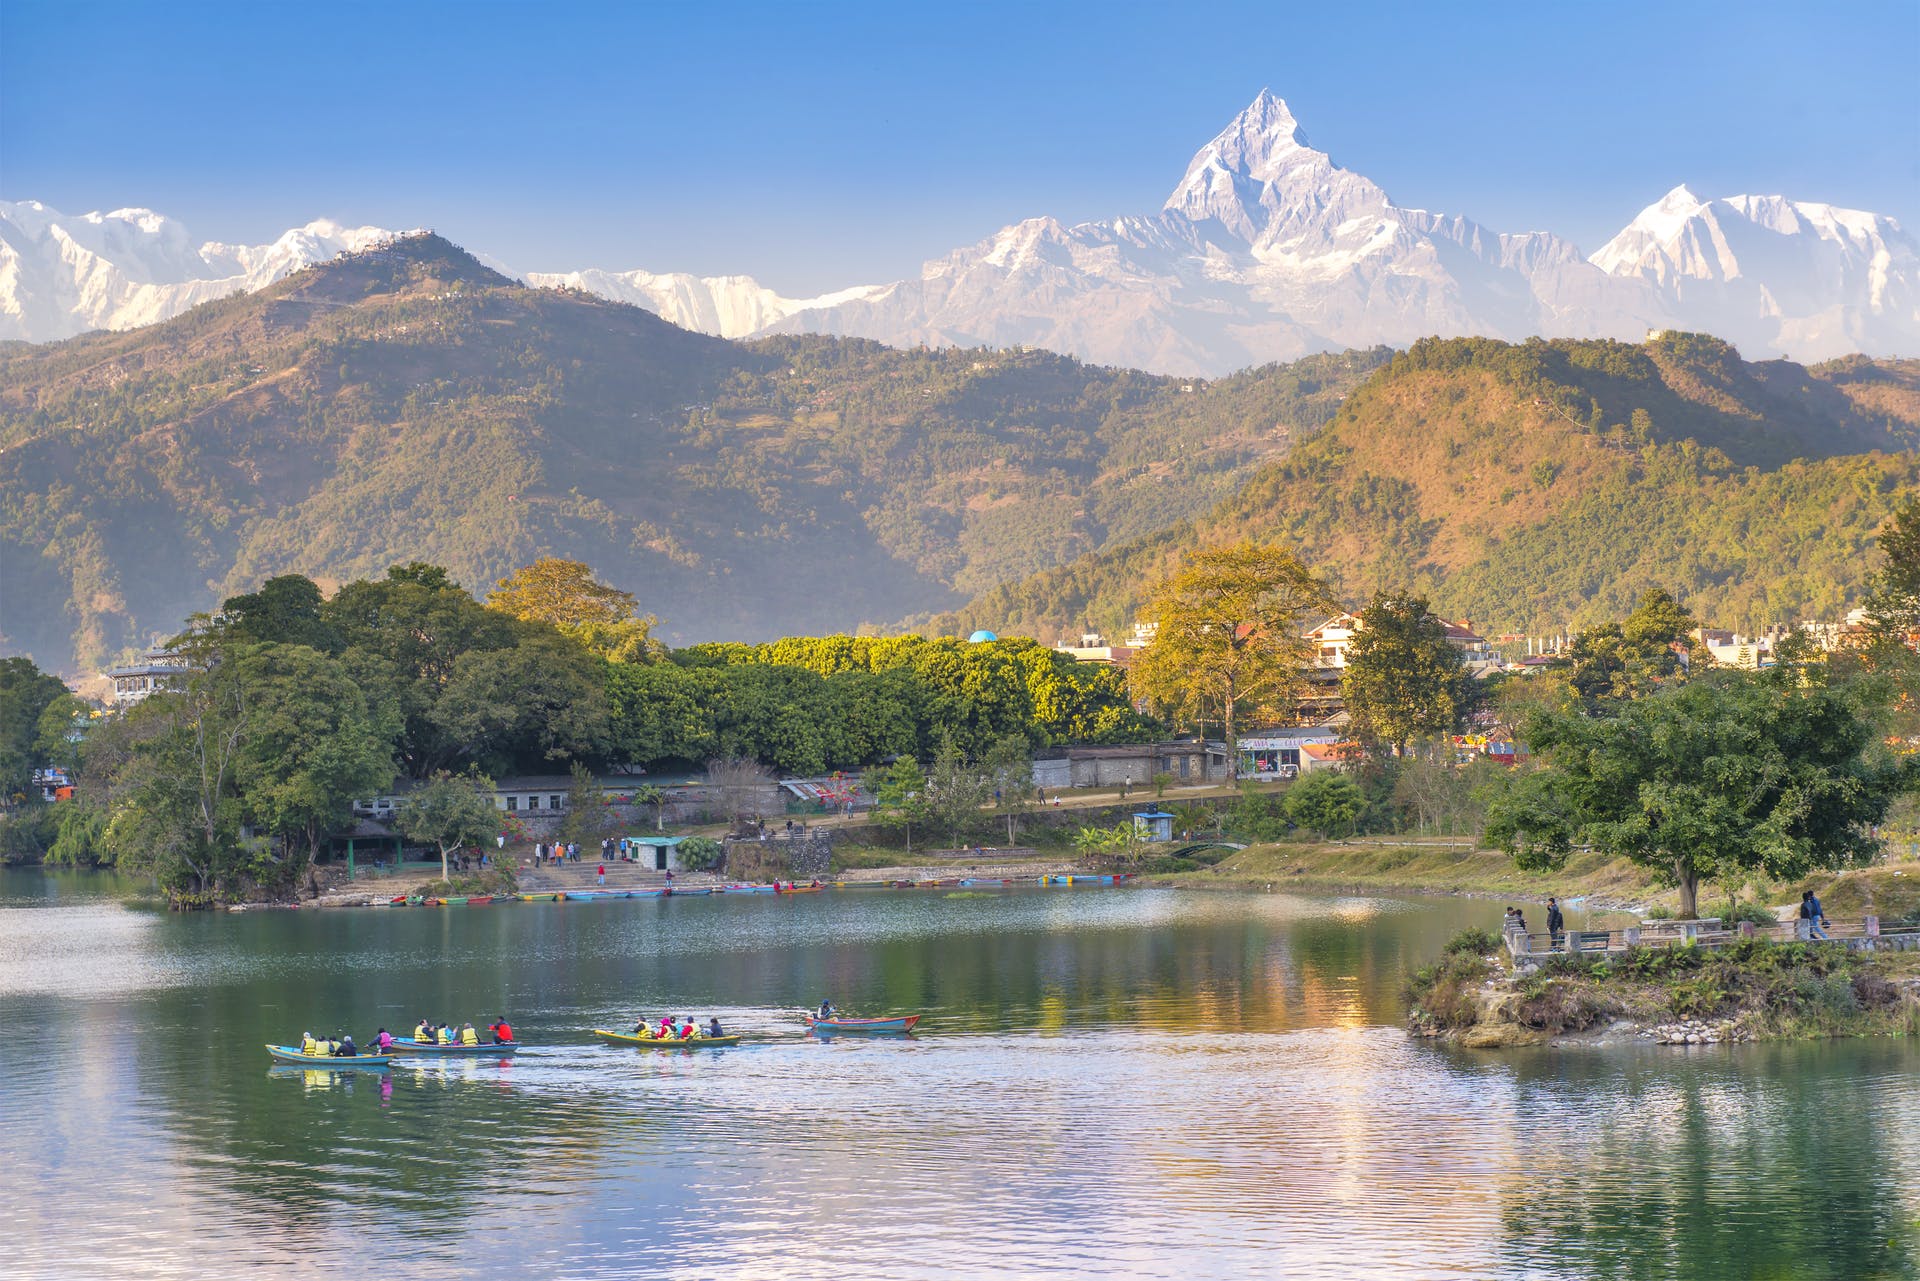 The stunning views around the Annapurna Sanctuary Route.